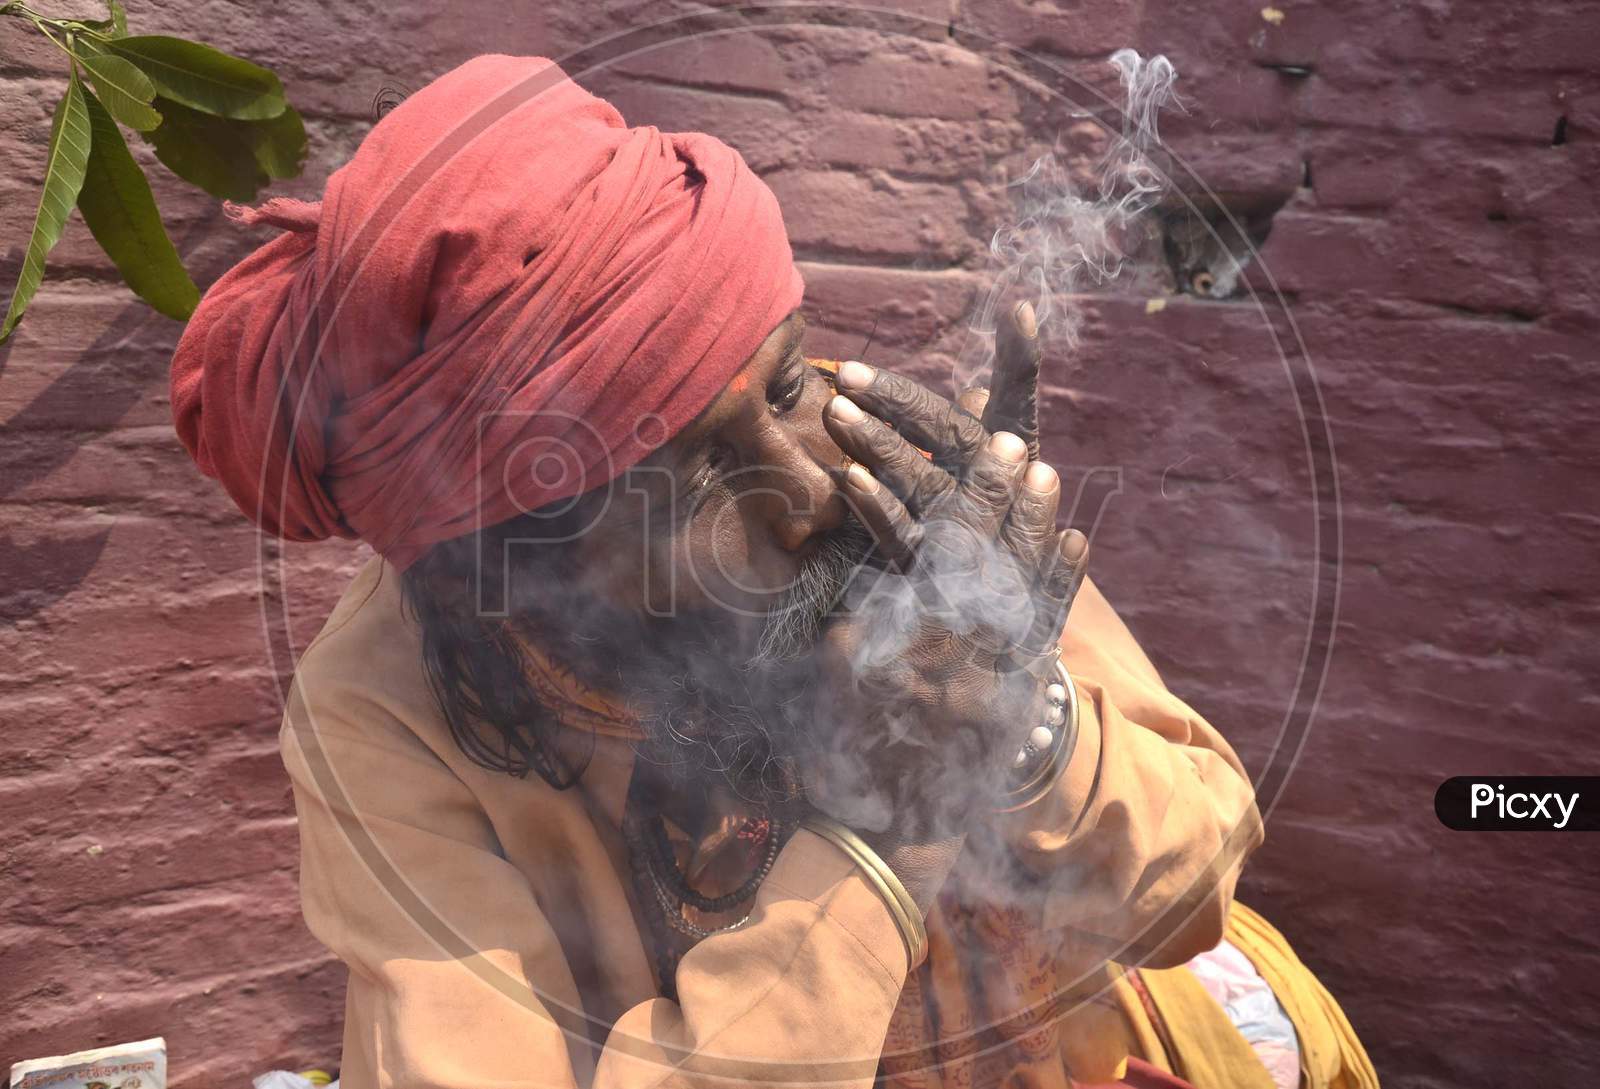 Sadhu smokes cannabis with a chillum